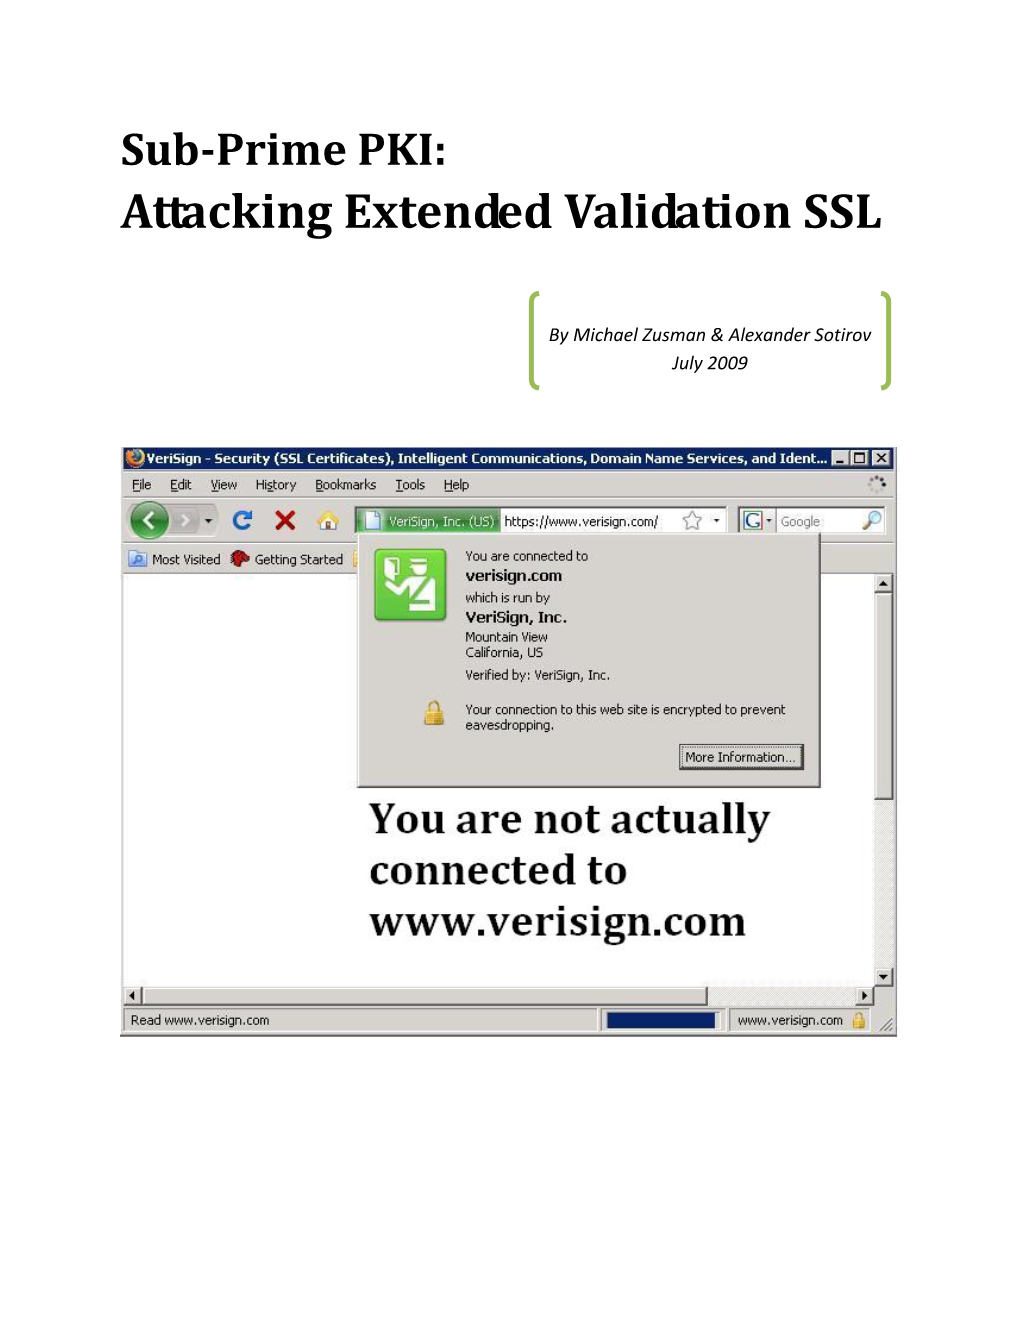 Sub-Prime PKI: Attacking Extended Validation SSL for Black Hat USA